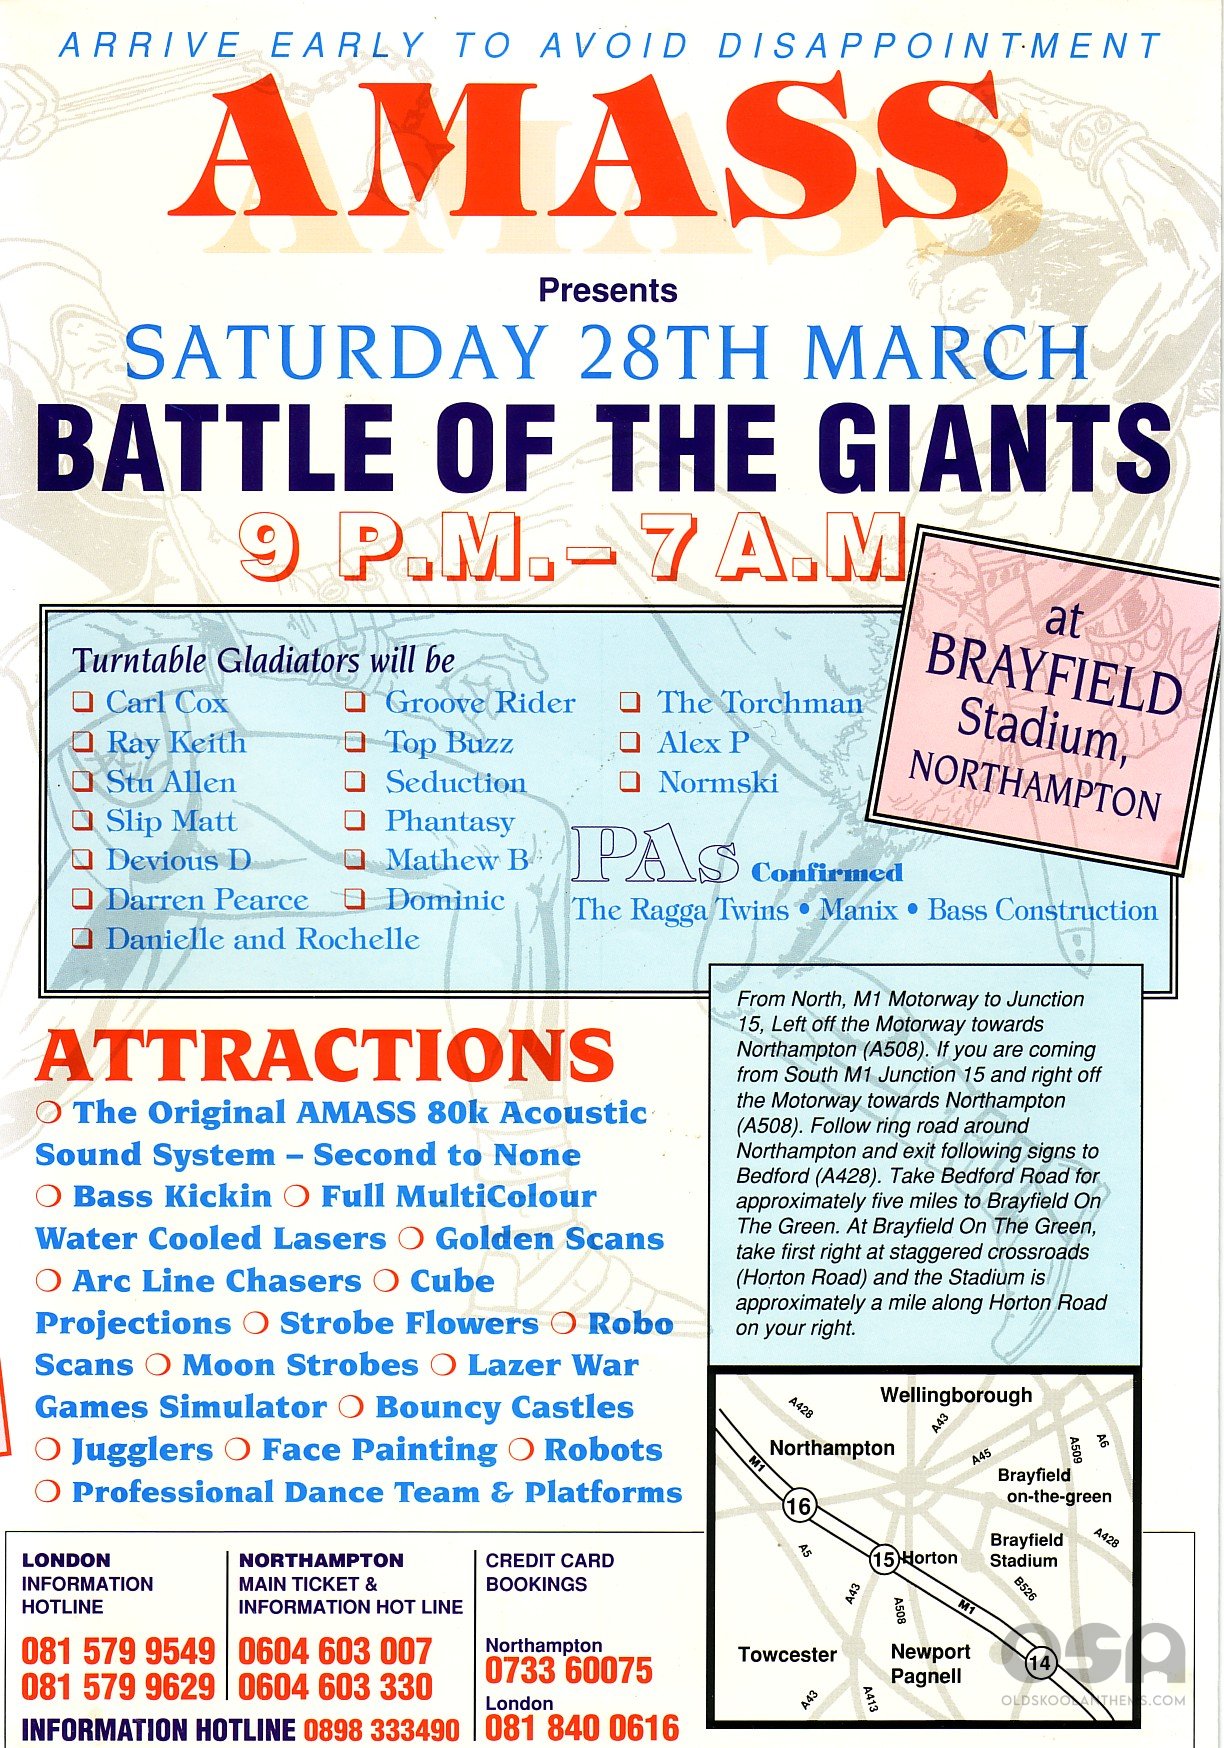 2_Amass_pres_Battle_of_the_Giants_Sat_28th_March_1992___Brayfield_Stadium_Northampton_centre.jpg